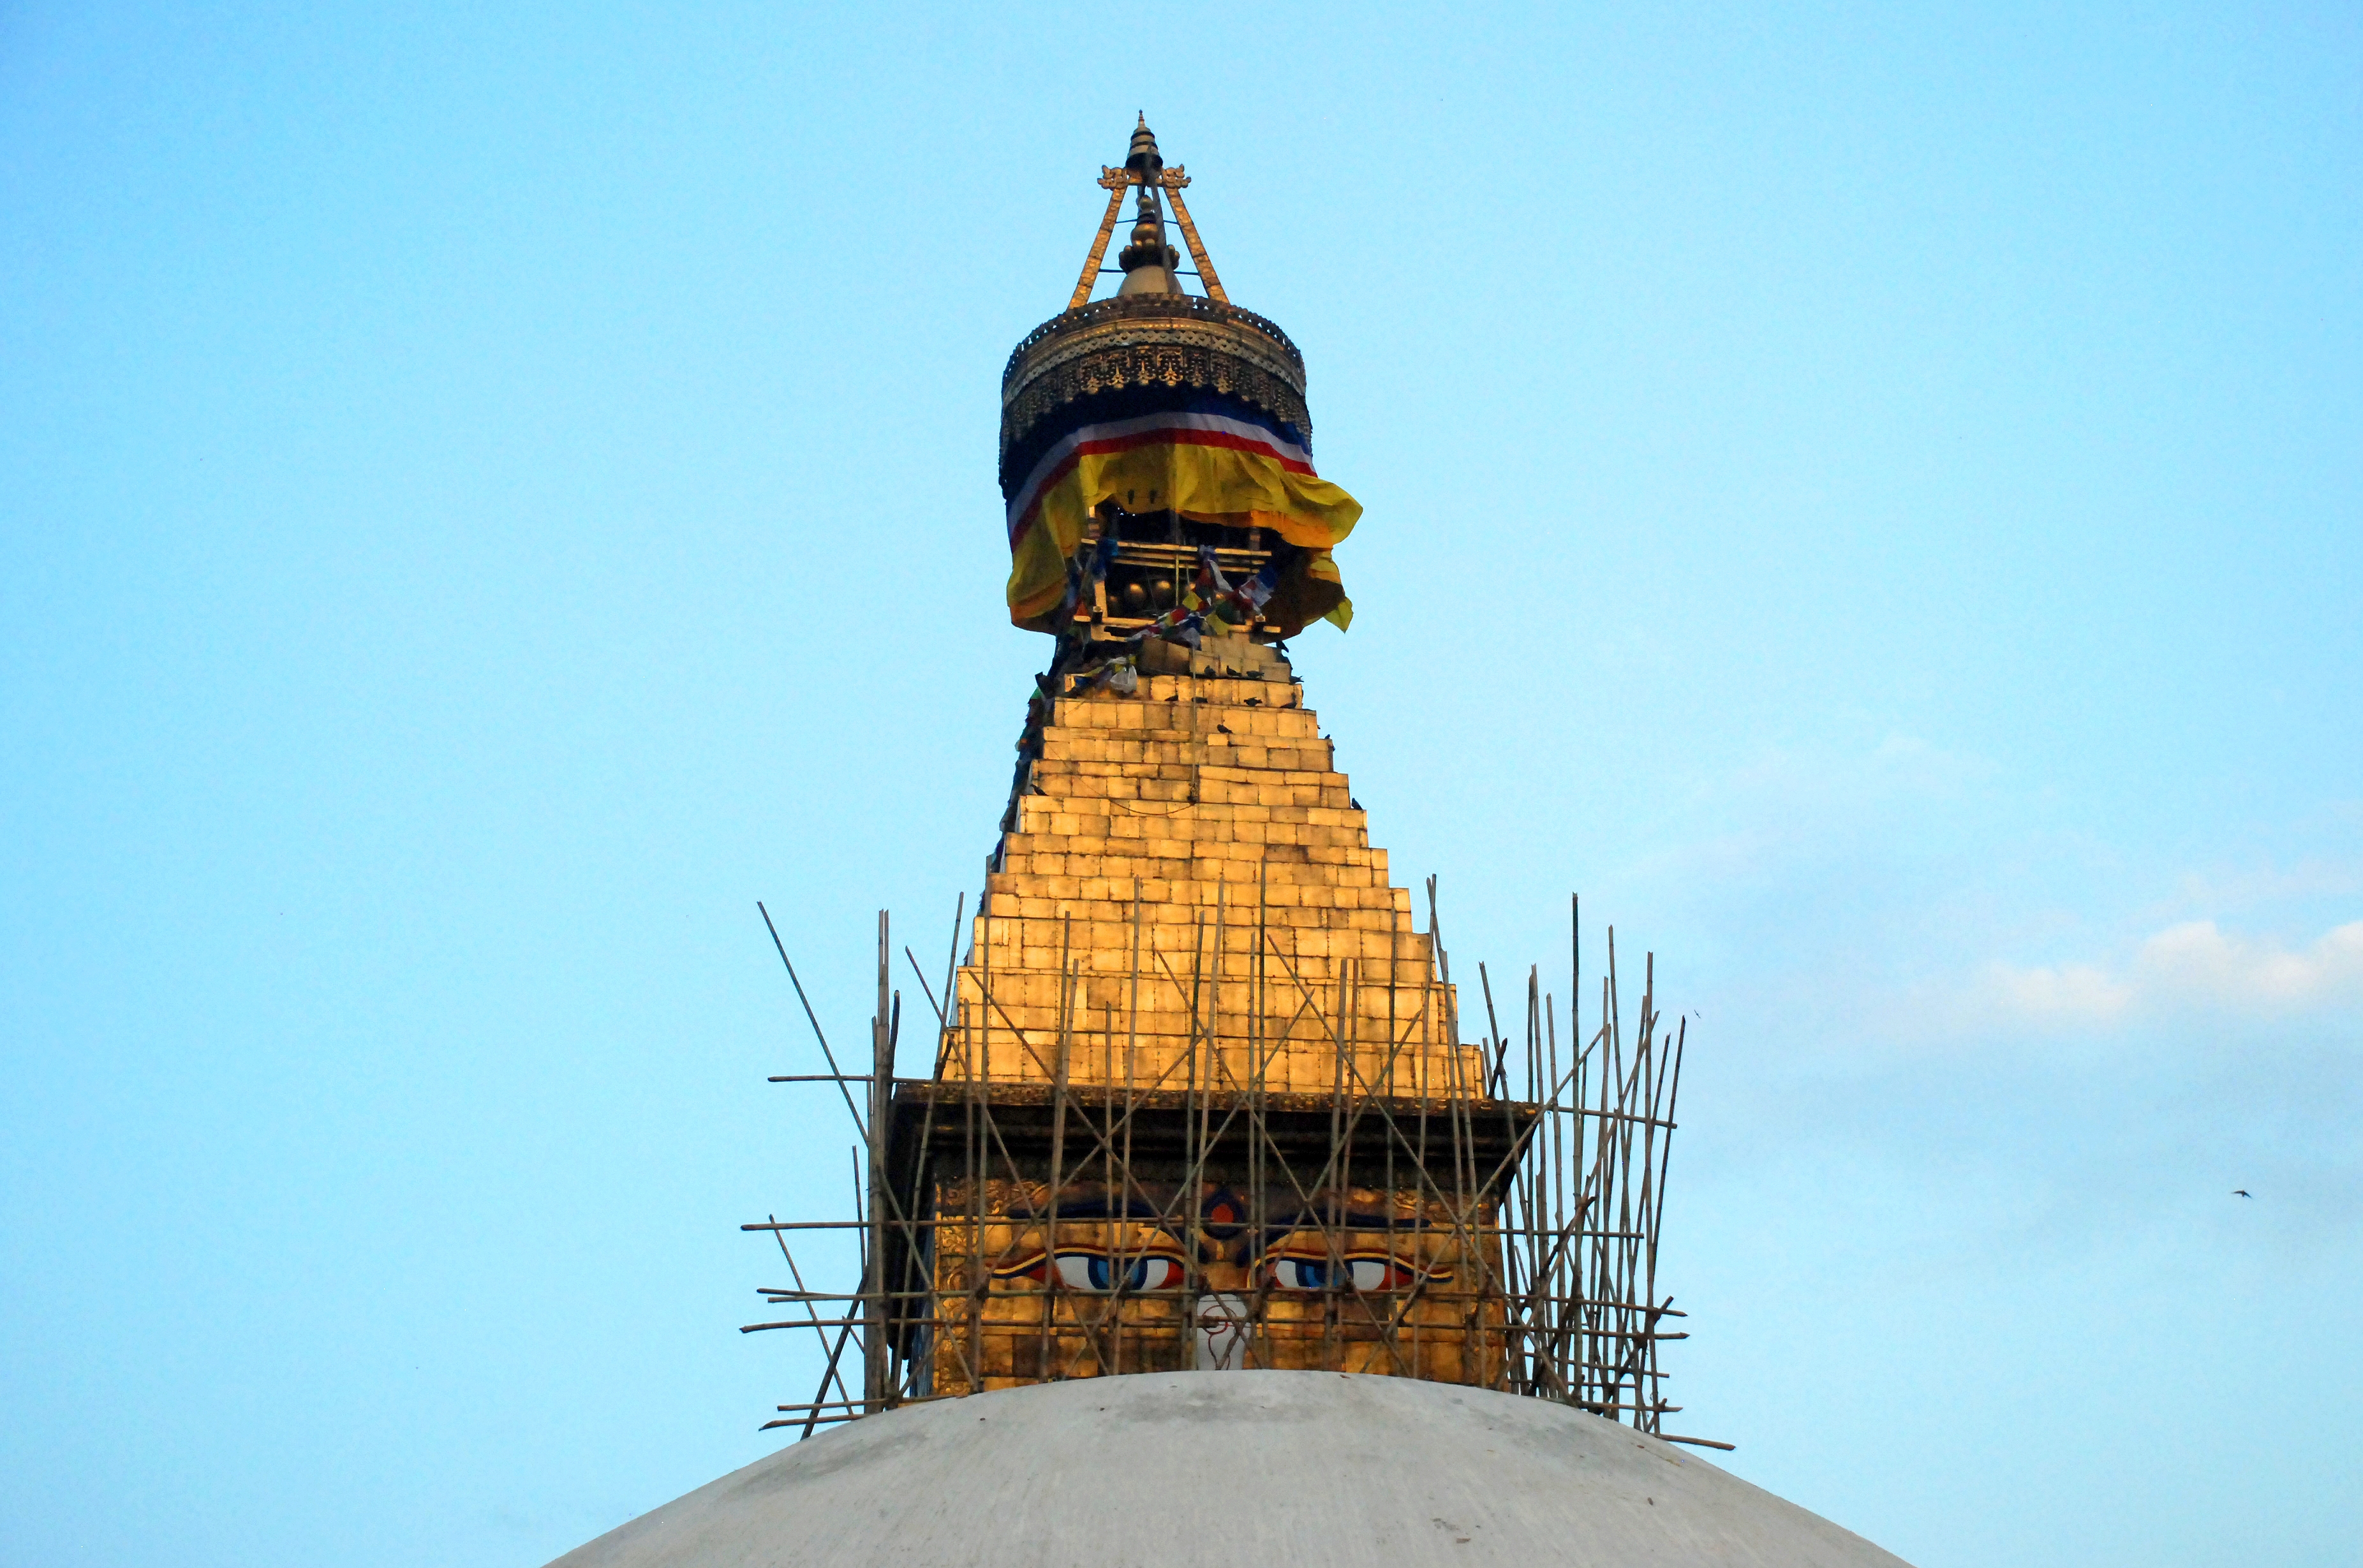 Scaffolding surrounding the damaged Boudha Stupa, Kathmandu, Nepal, after the second Nepal earthquake on May 12 damaged the structure. Photo: Ingrid Piper